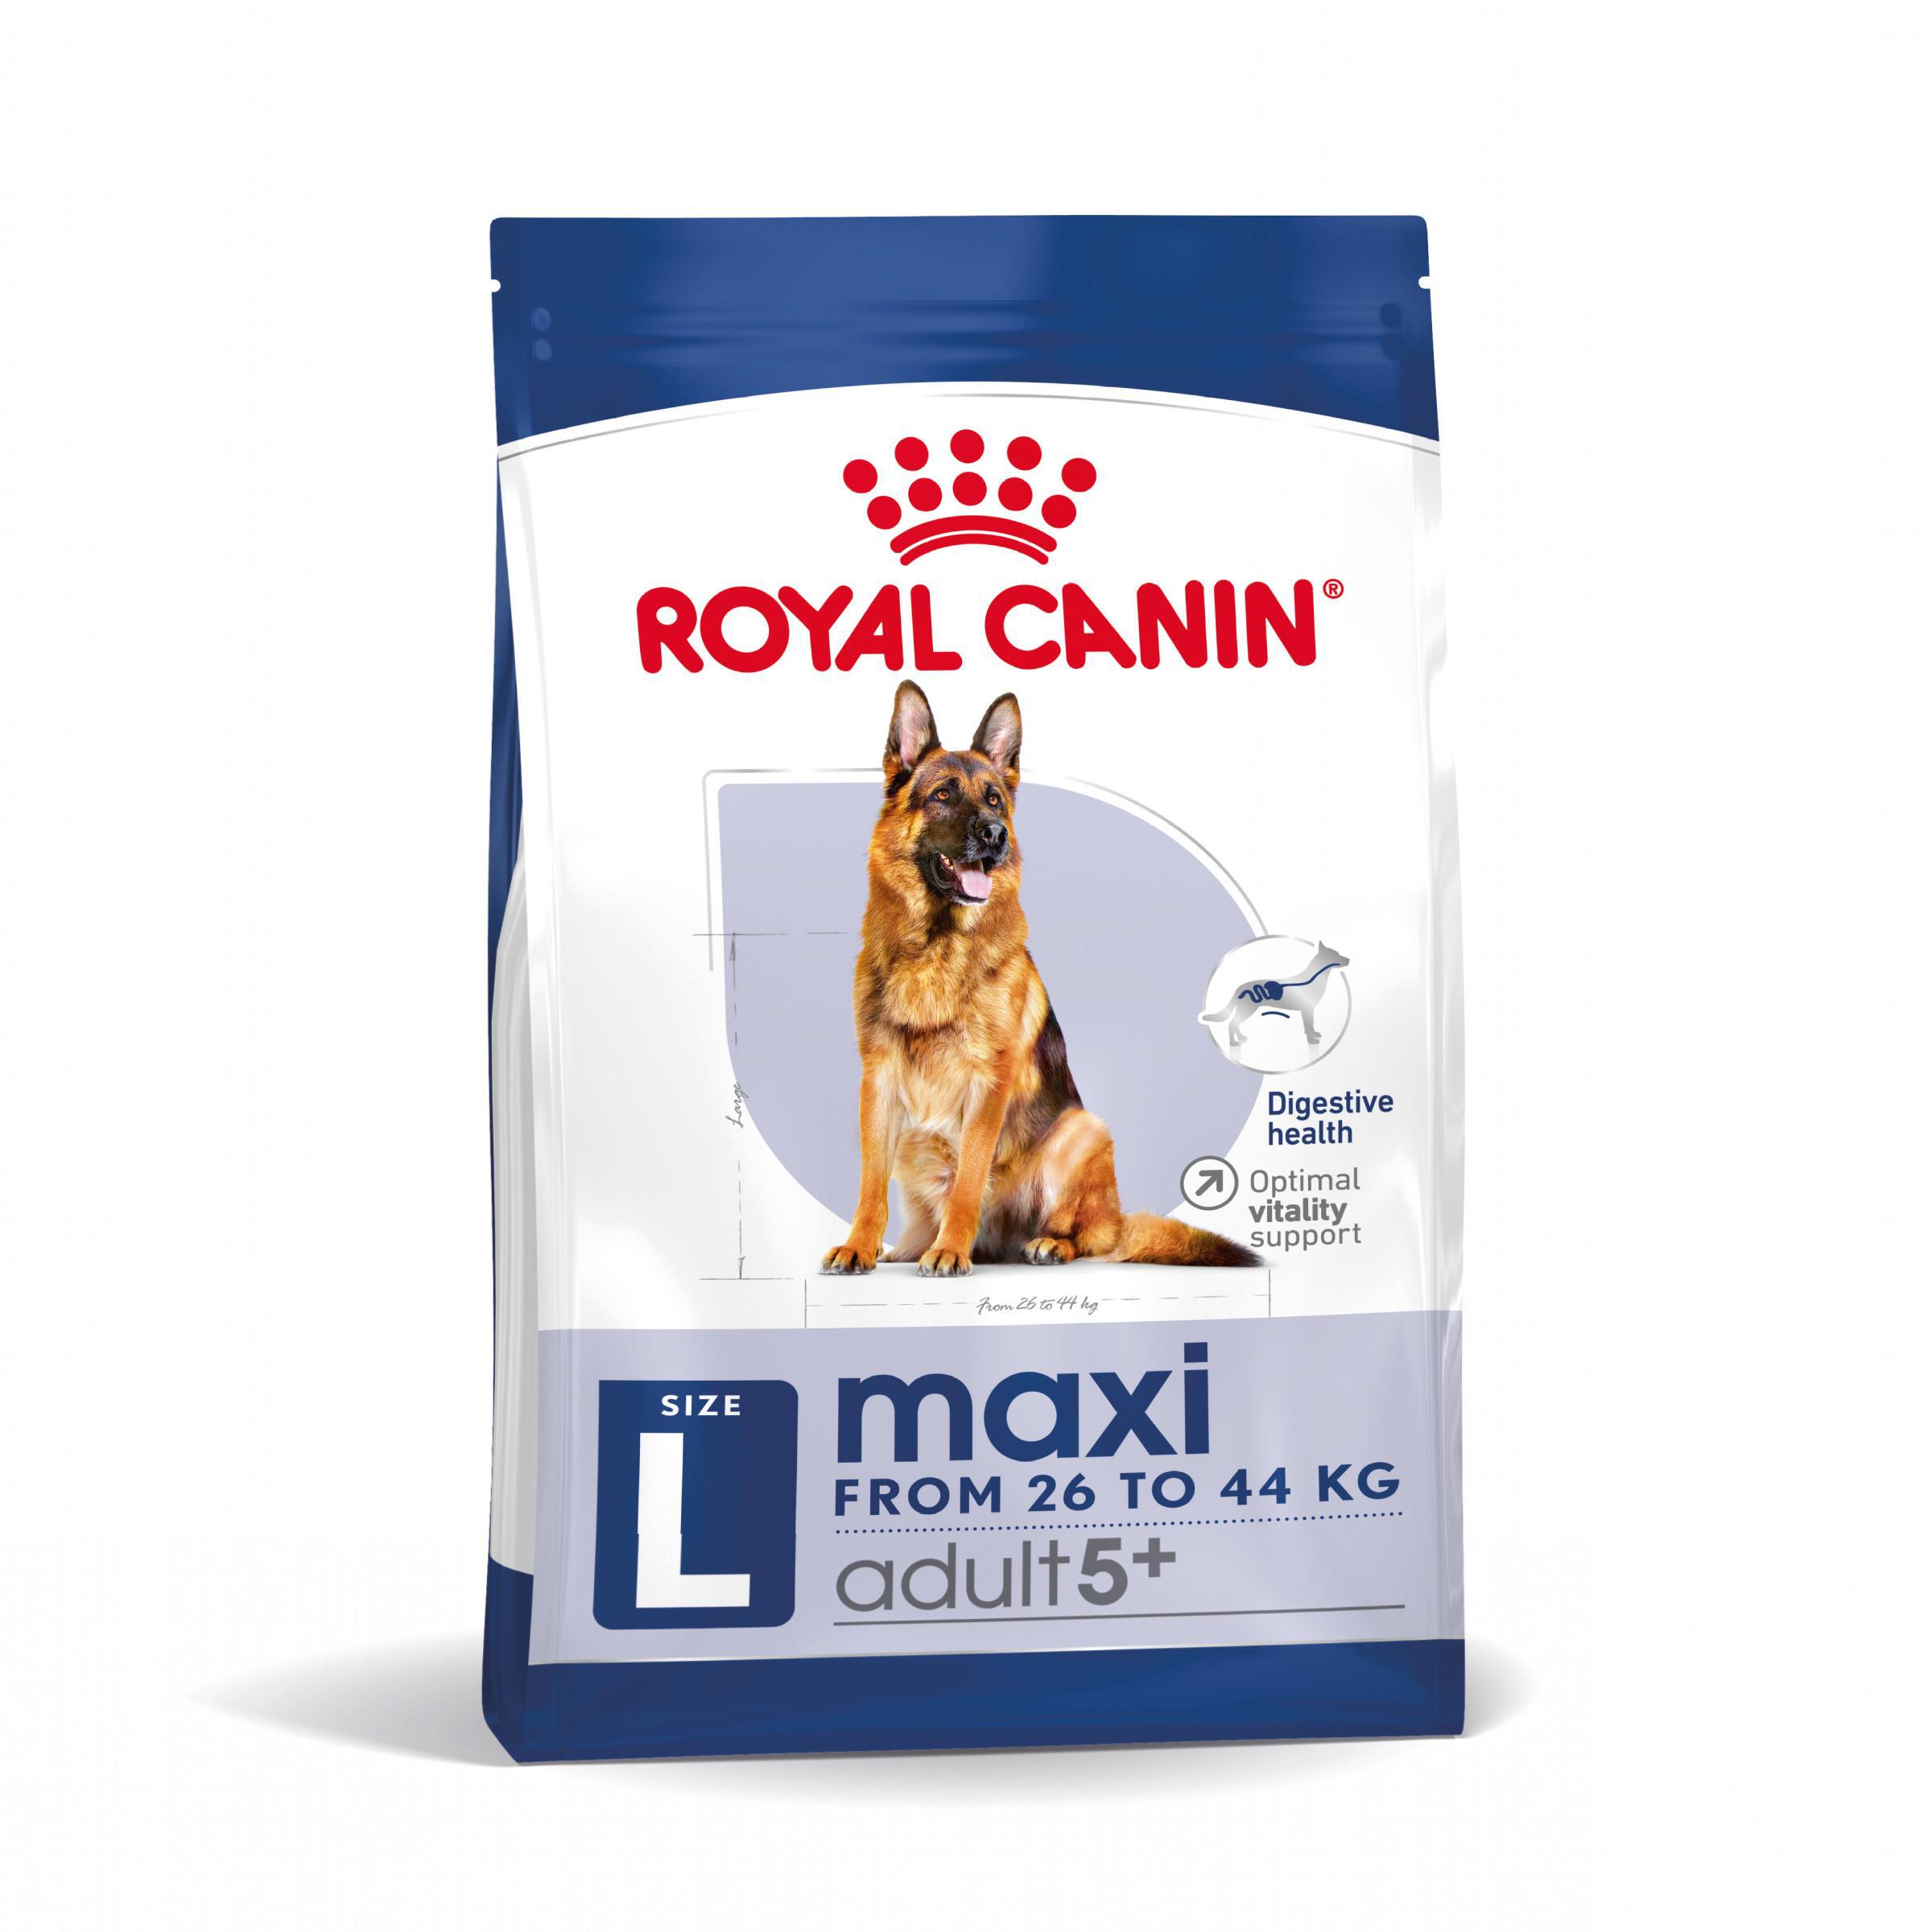 Royal Canin Maxi Adult 5+ - Hondenvoer voor oudere honden van grote rassen (26 tot 44kg) Vanaf 5 jaar - 15kg